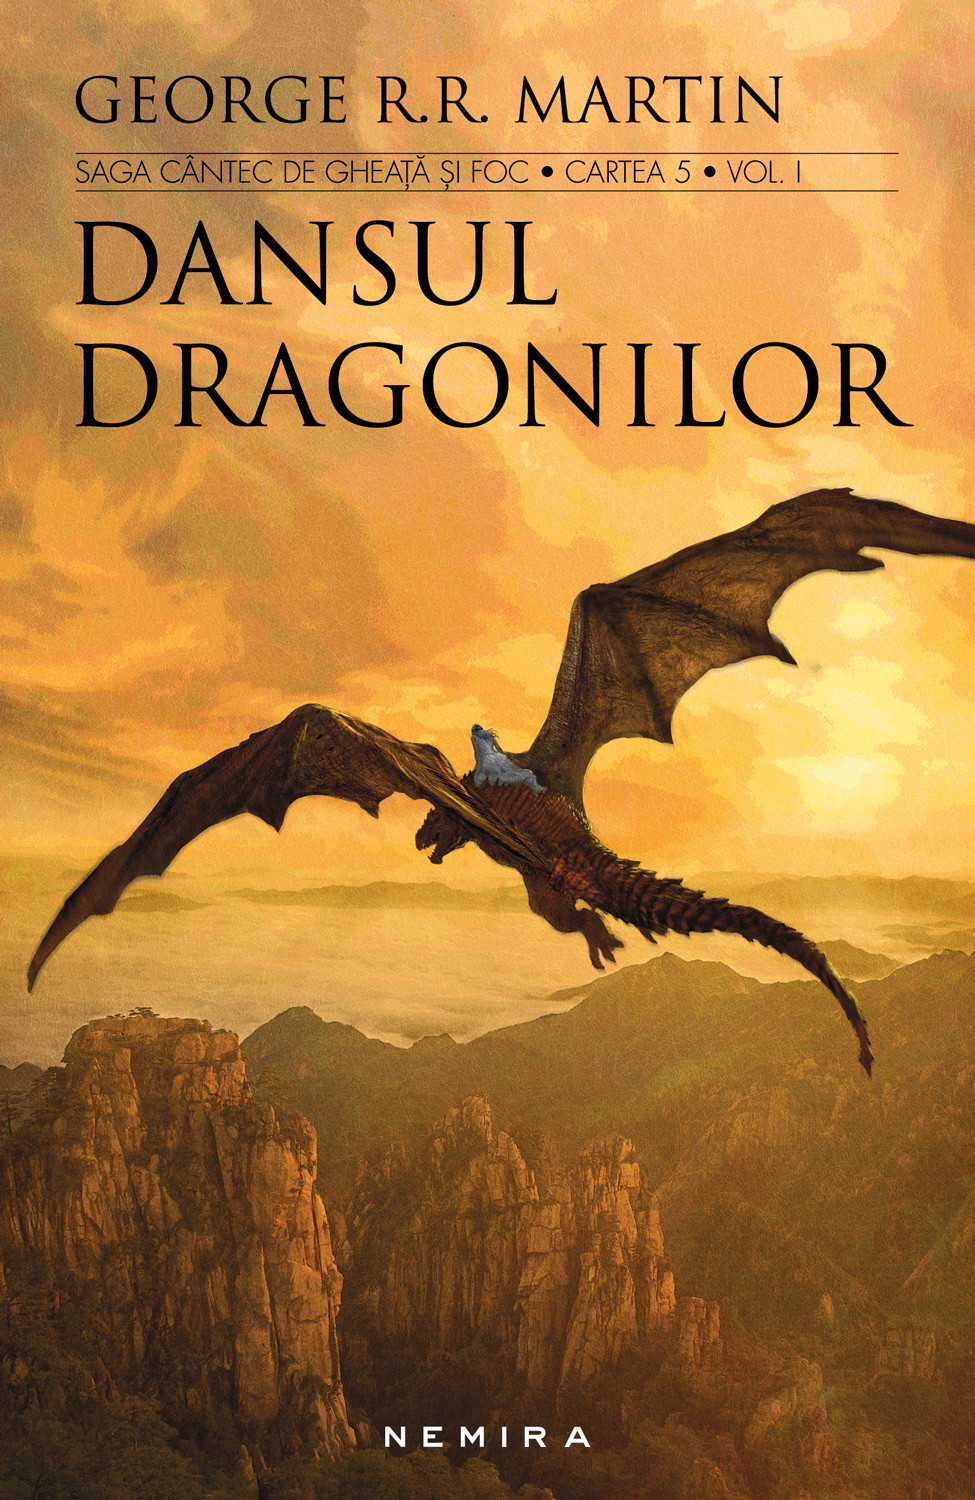 Dansul dragonilor | George R.R. Martin carturesti.ro poza bestsellers.ro